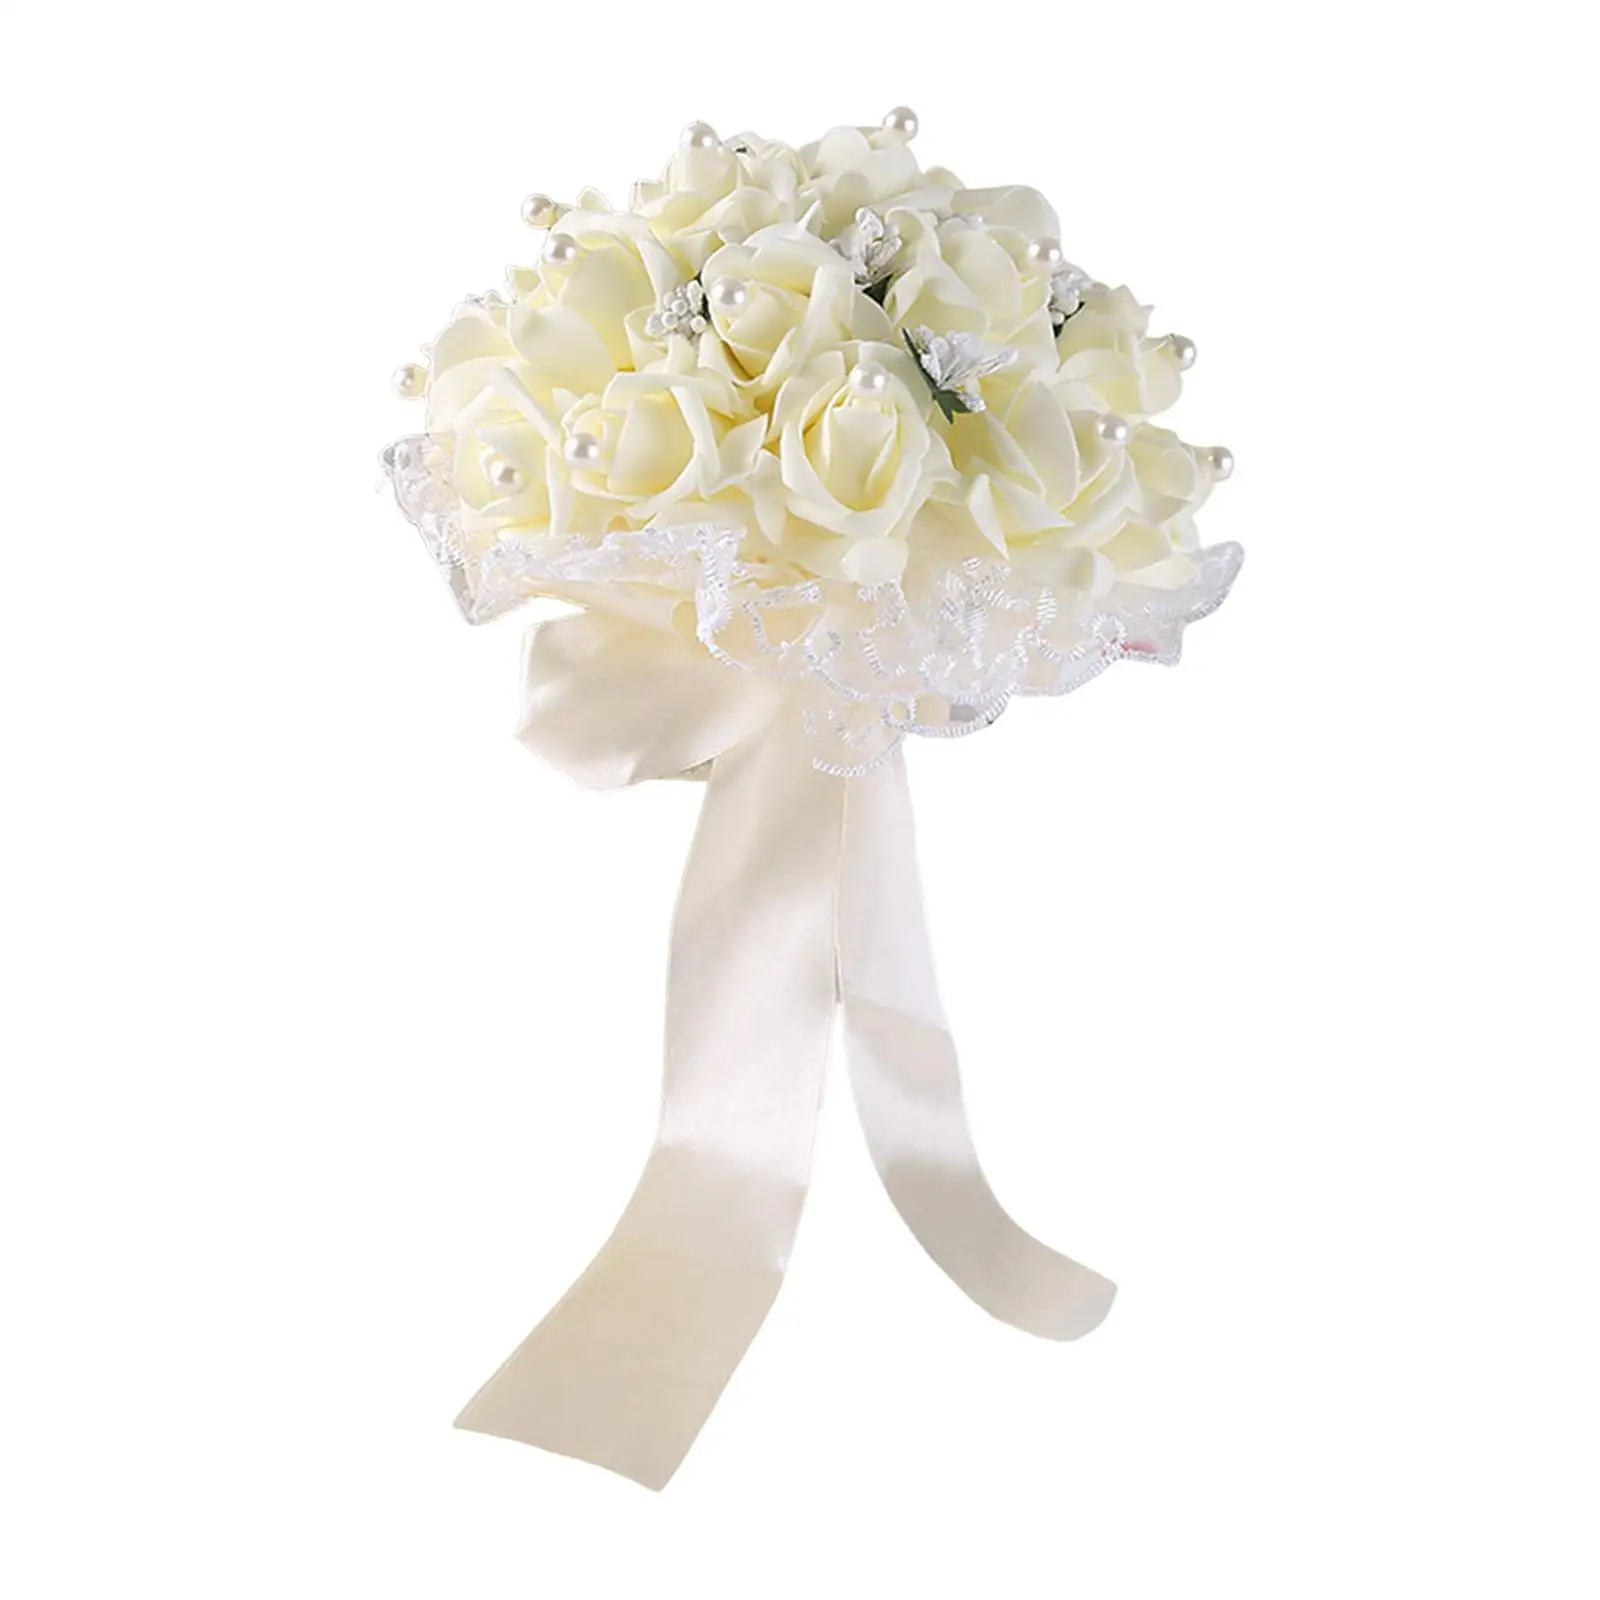 Wedding Bouquets Handmade Decorative with Silk Ribbon Bridal Wedding Throw Bouquet for Photo Prop Wedding Holiday Decor